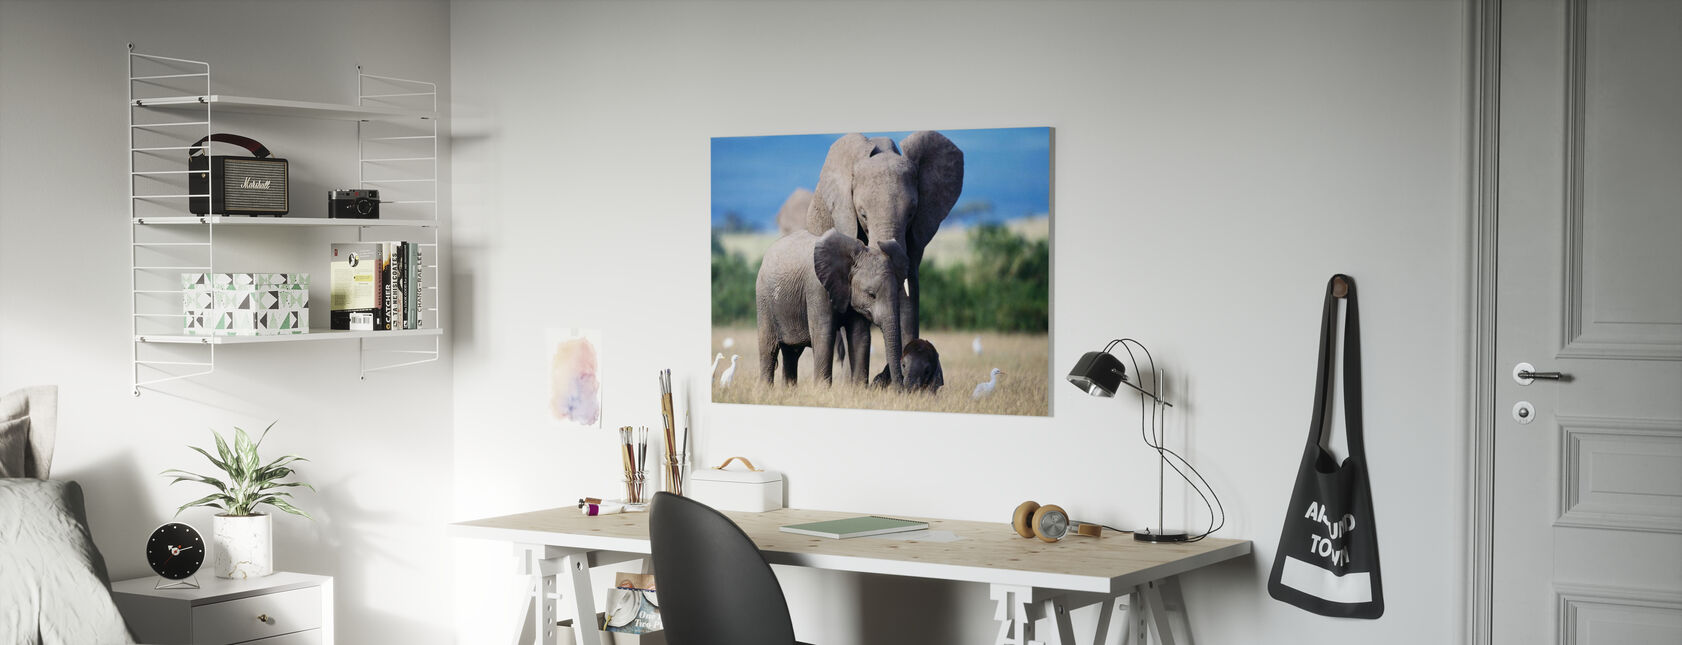 Elephant Family - Canvas print - Kids Room